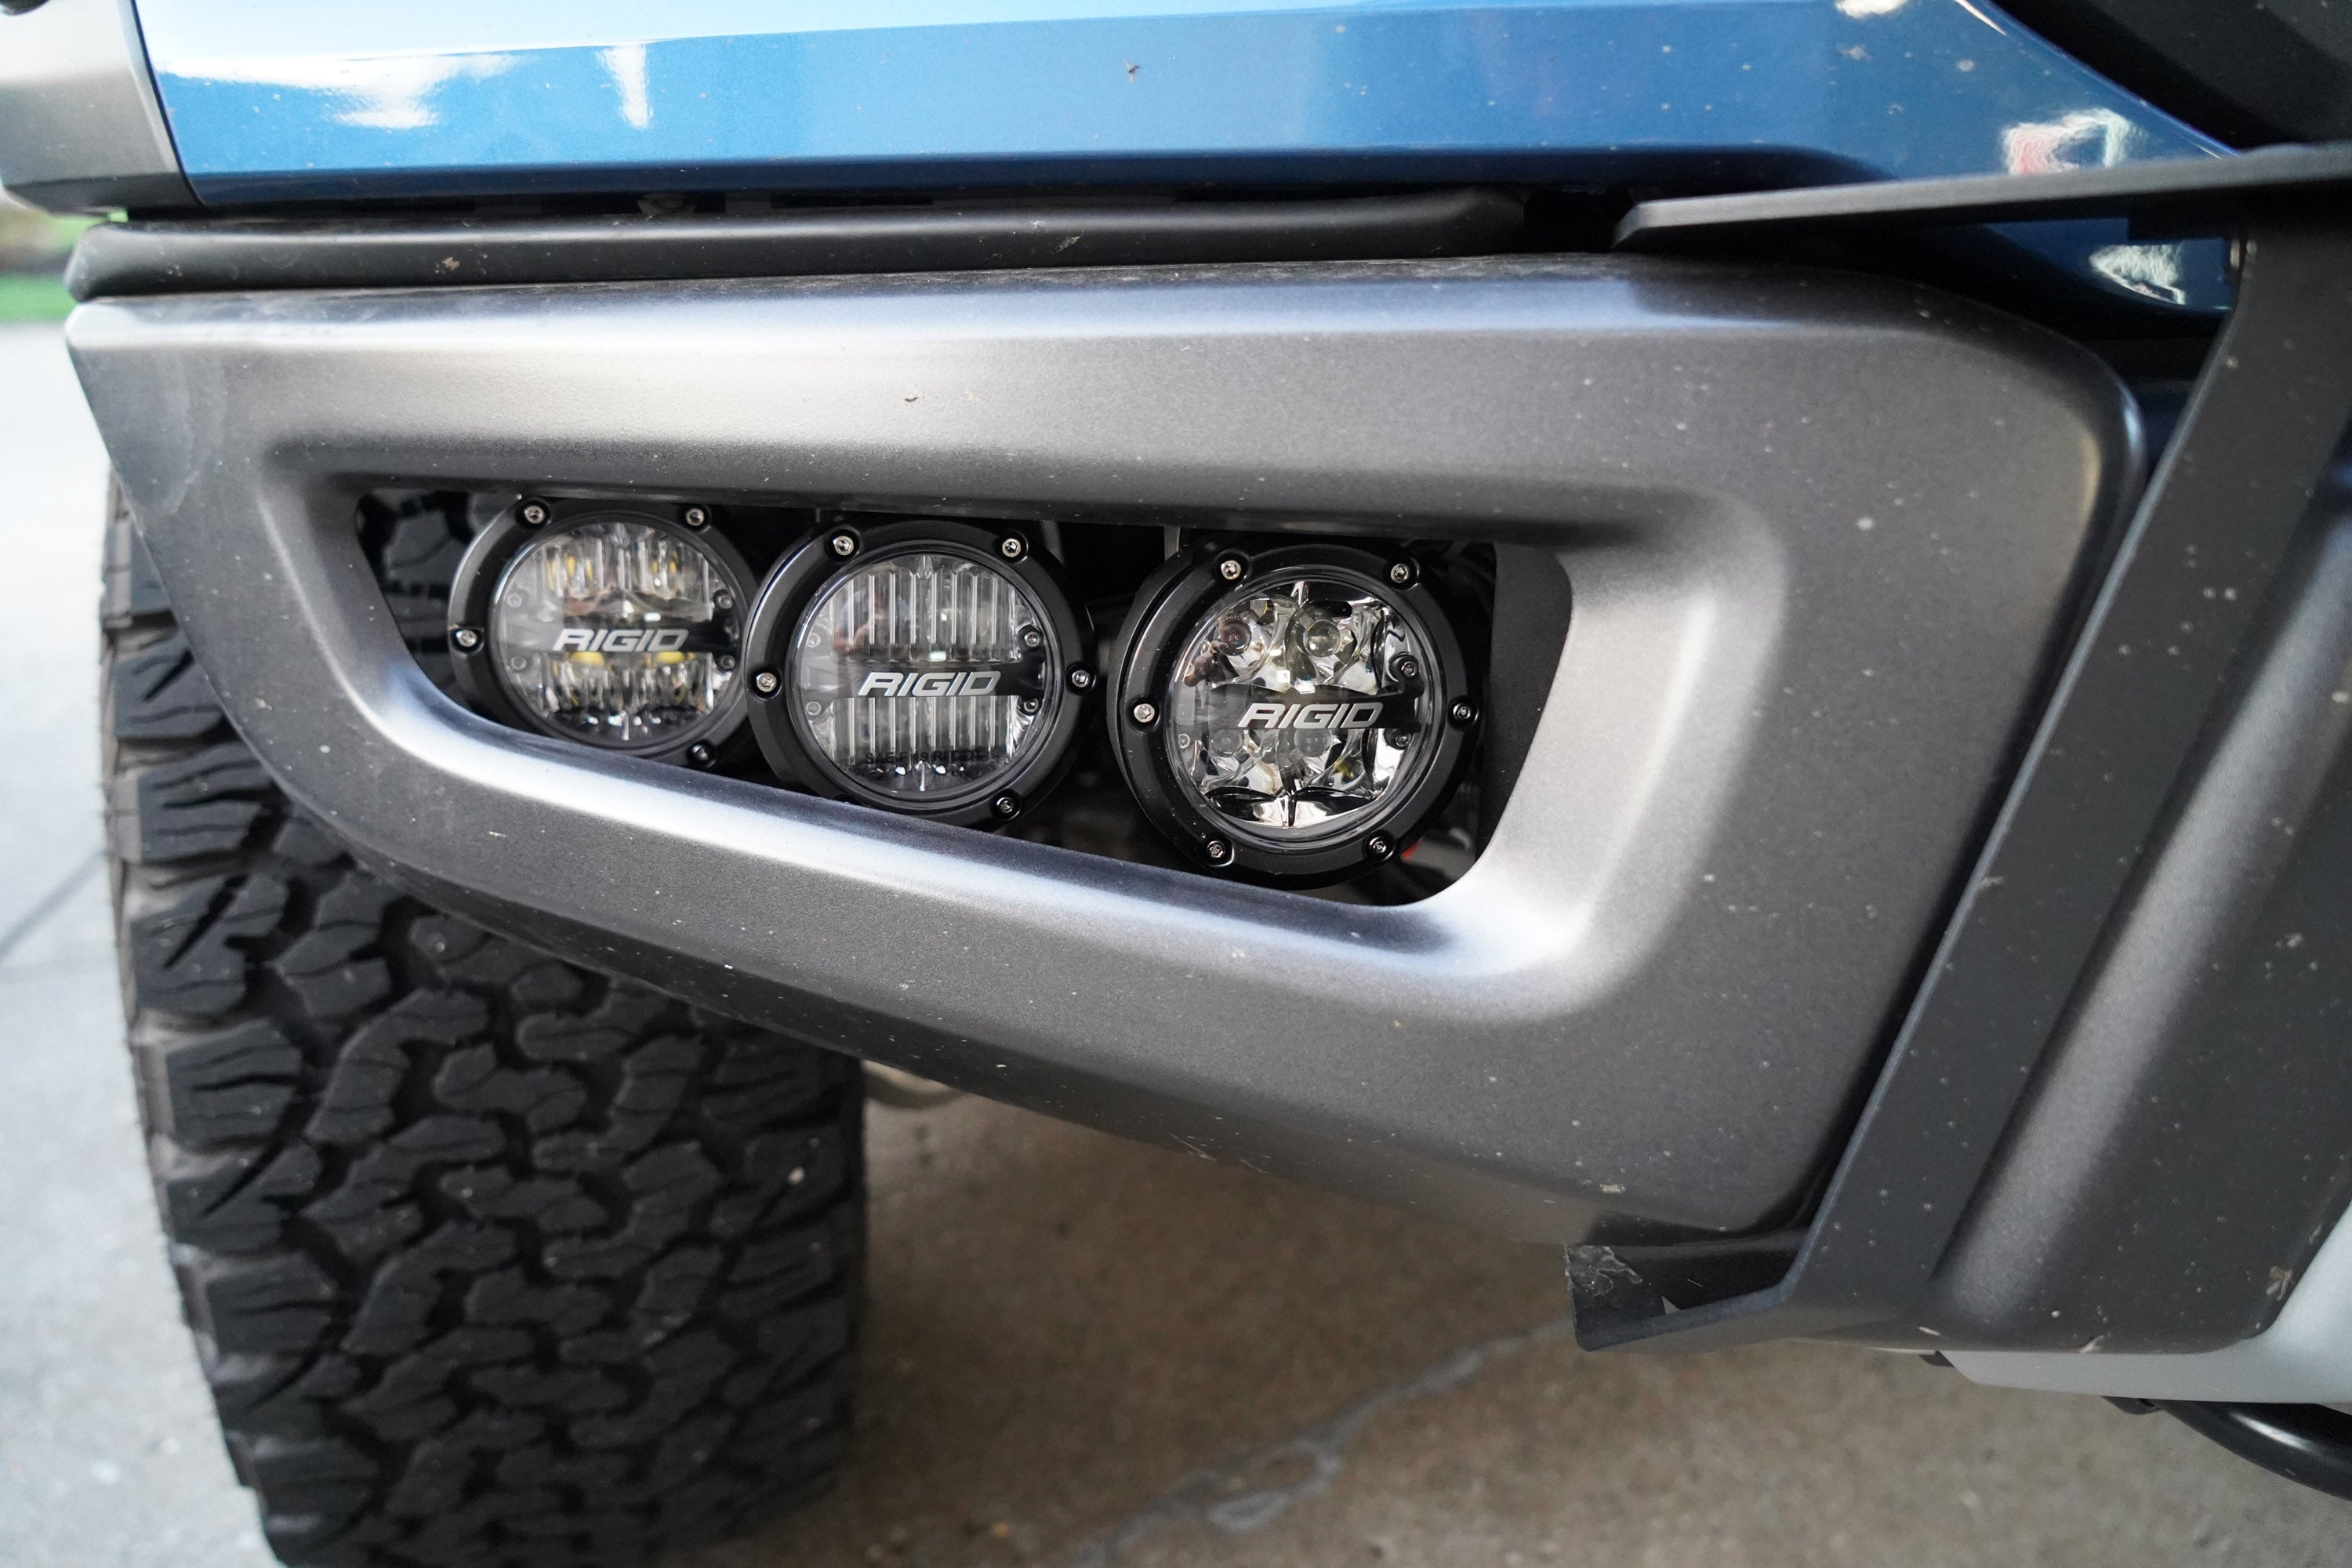 SPV Parts 2017-2020 Ford F-150 Raptor Rigid ROUND 360 Series Triple Fog Light Kit Including Brackets (Front Only) - LED Lights